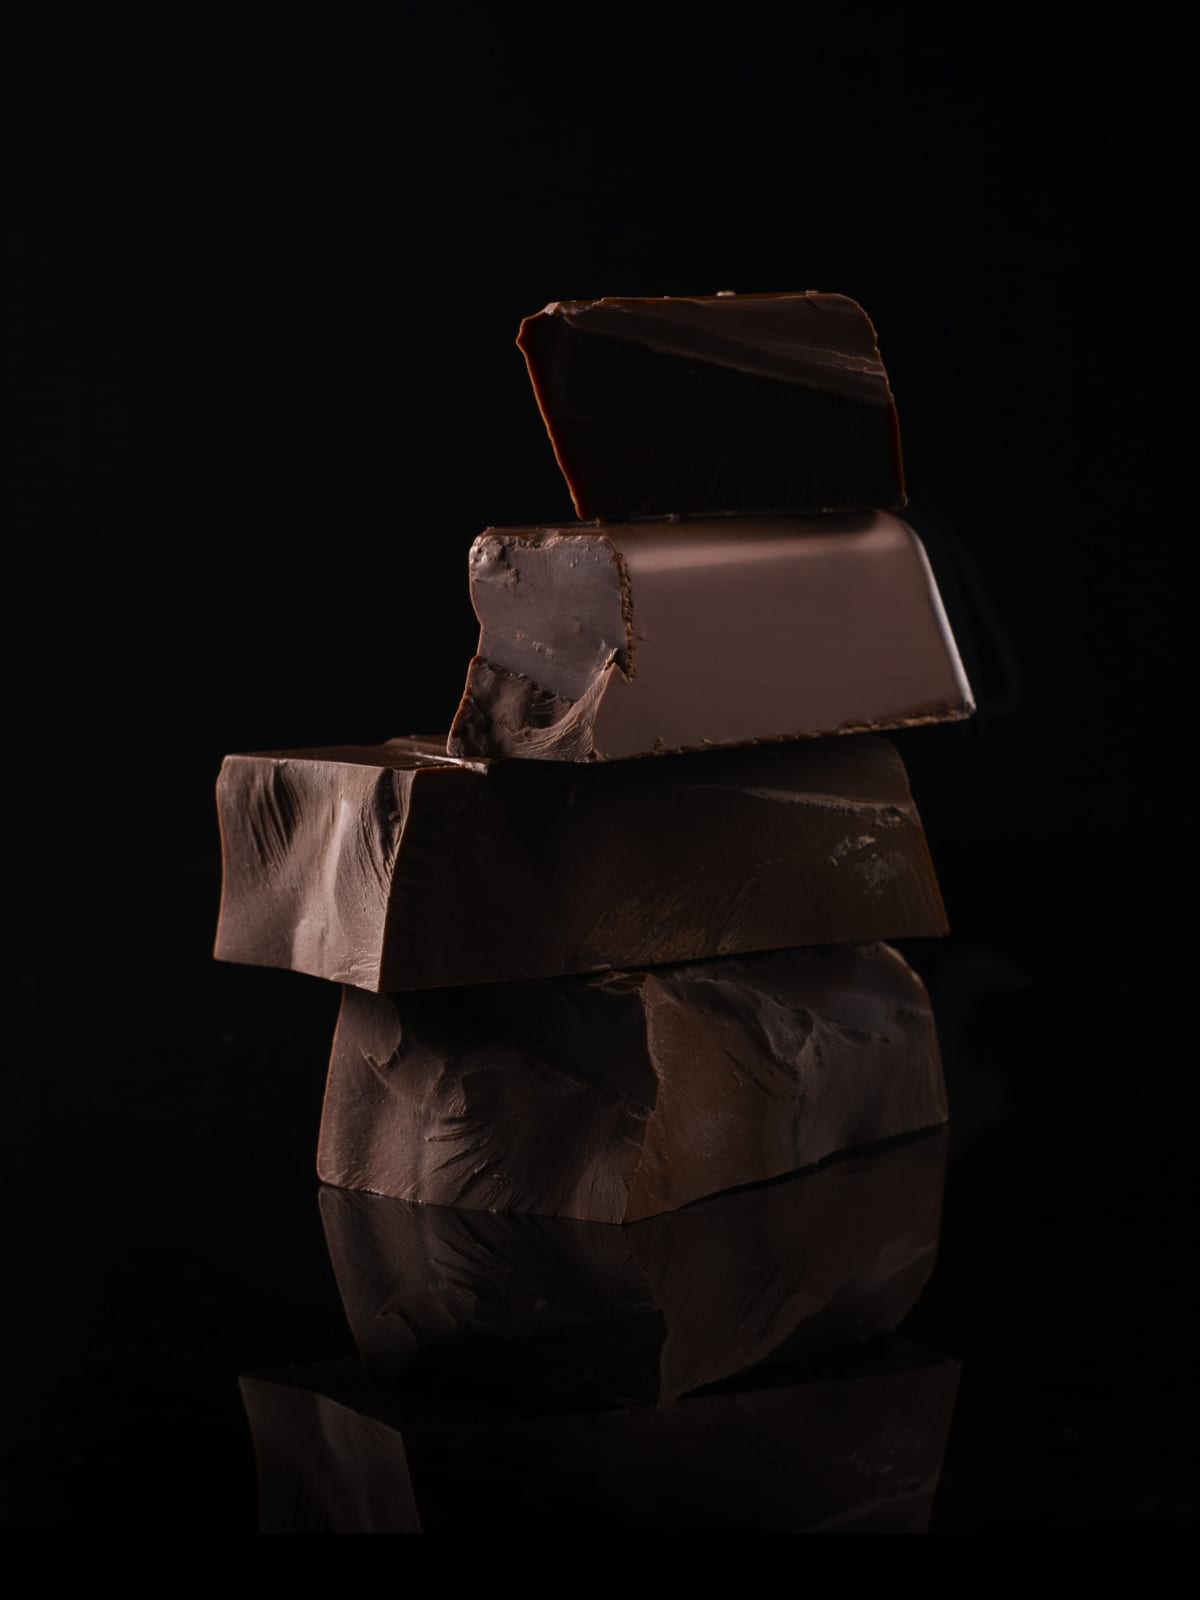 Piled up blocks of chocolate on black background